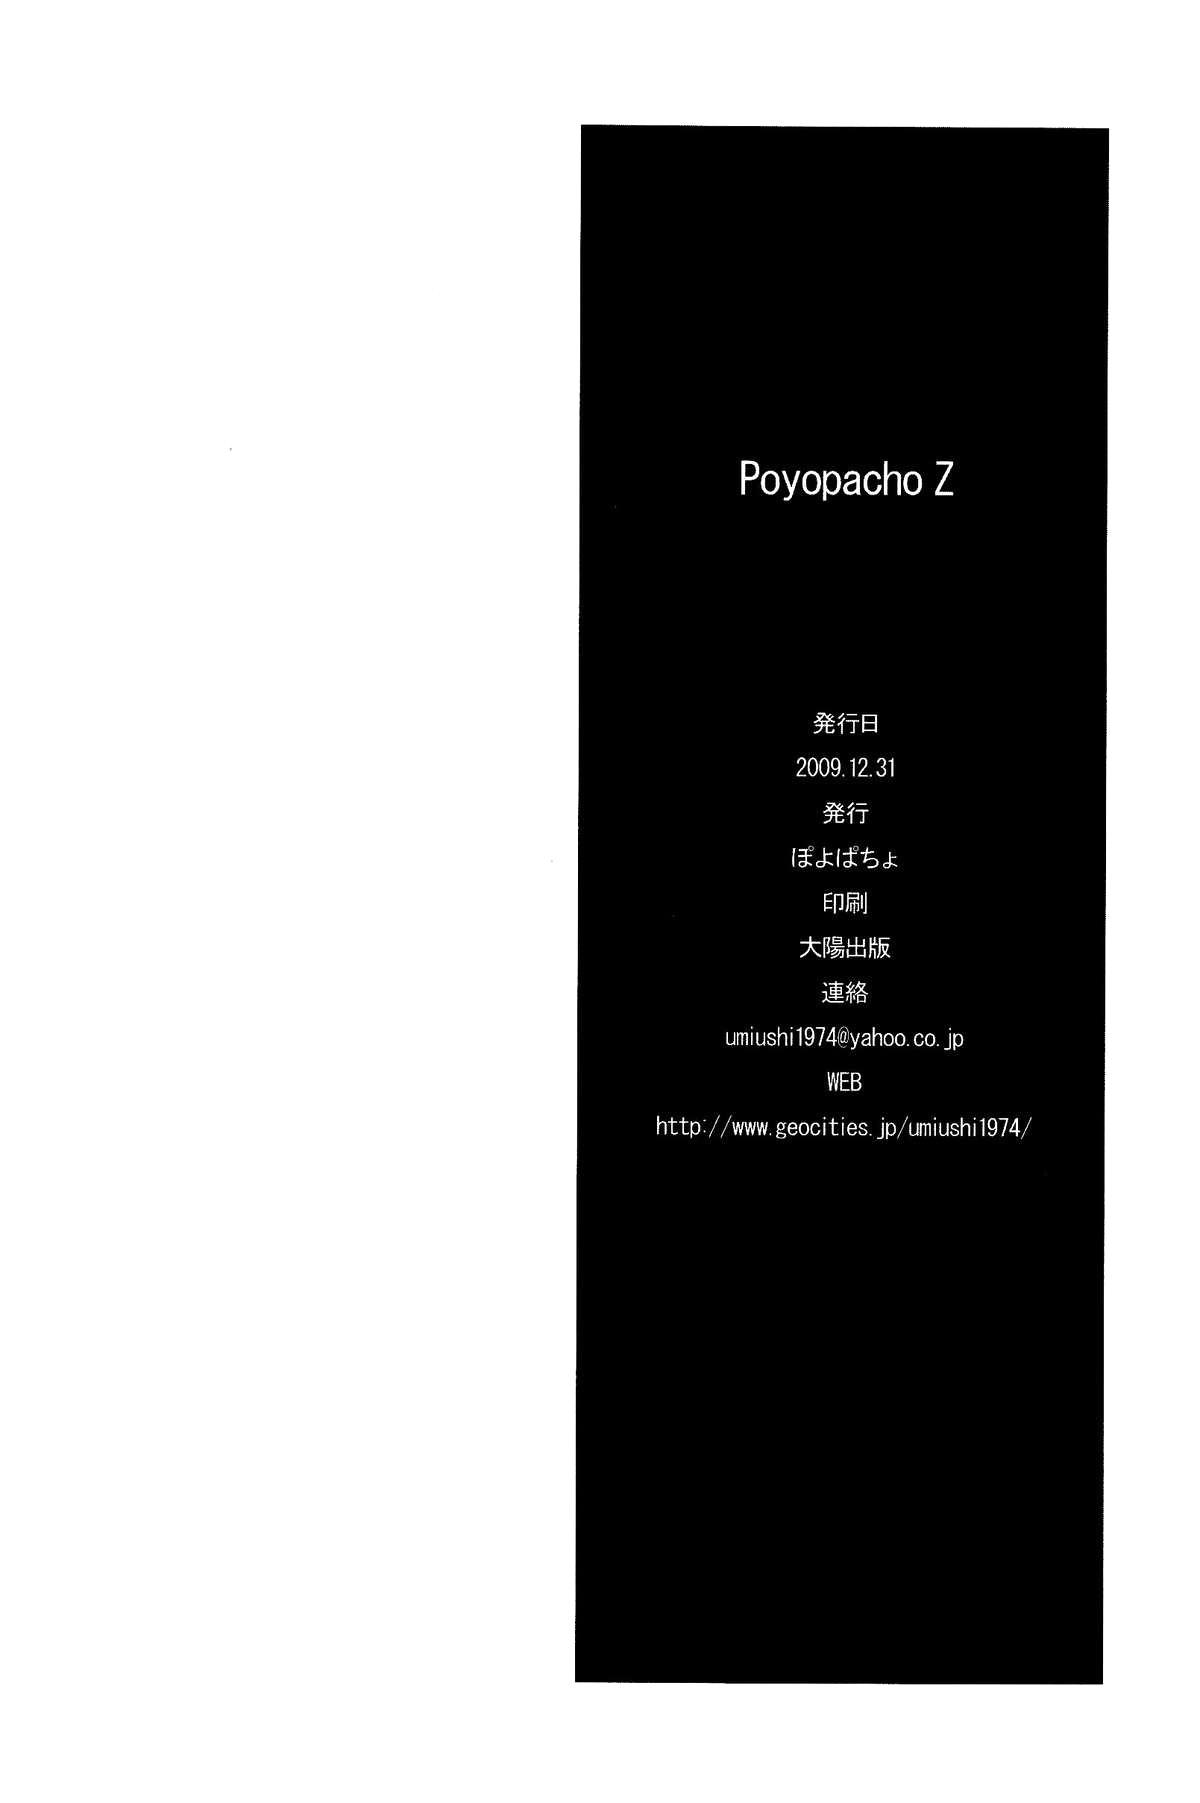 Extreme Poyopacho Z - Neon genesis evangelion Pica - Page 26